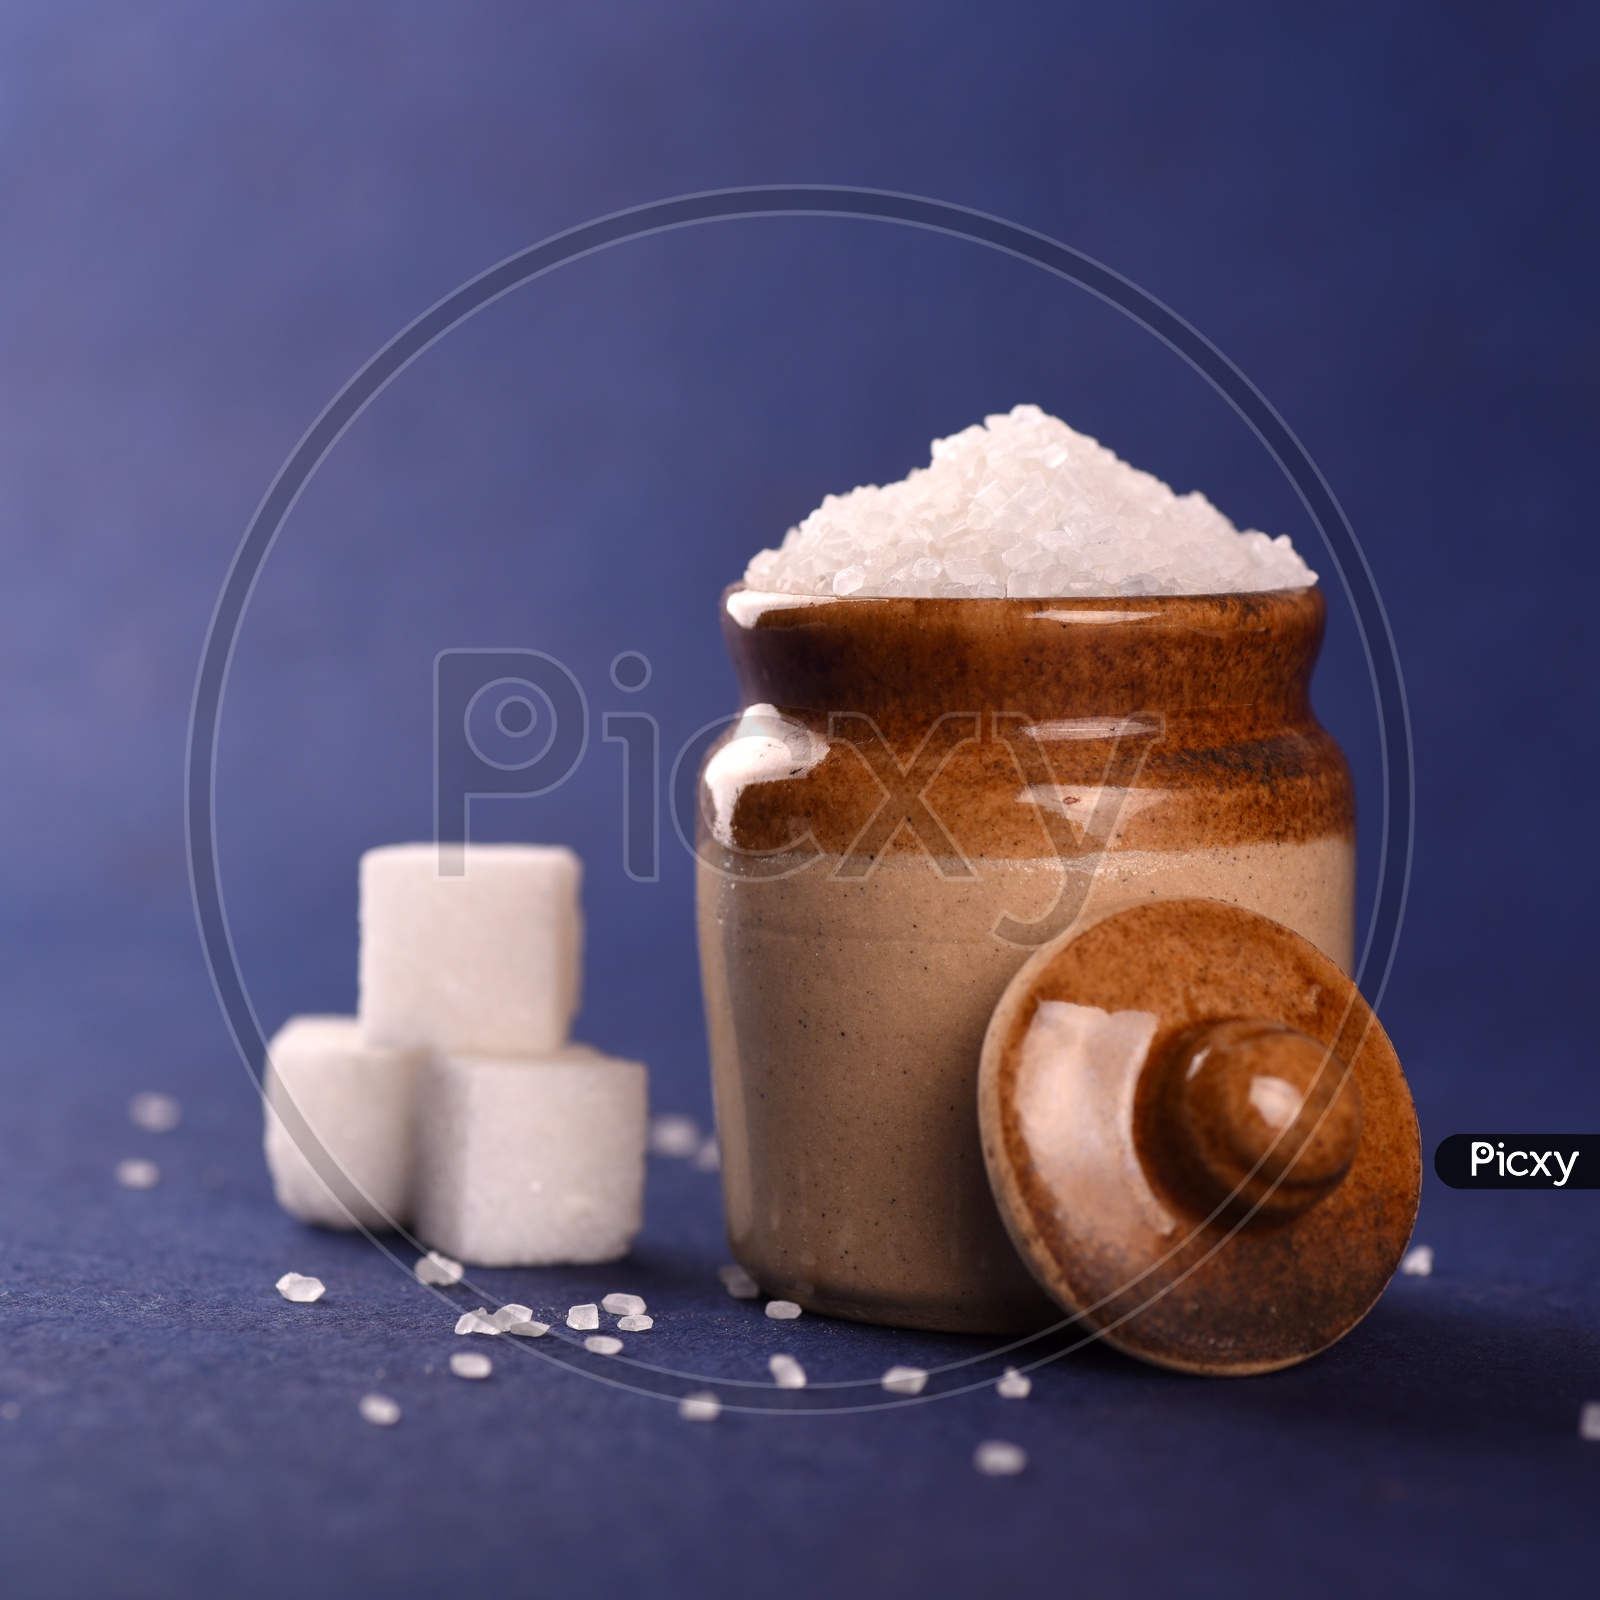 Sugar cubes and granulated sugar in a ceramic jar on blue background